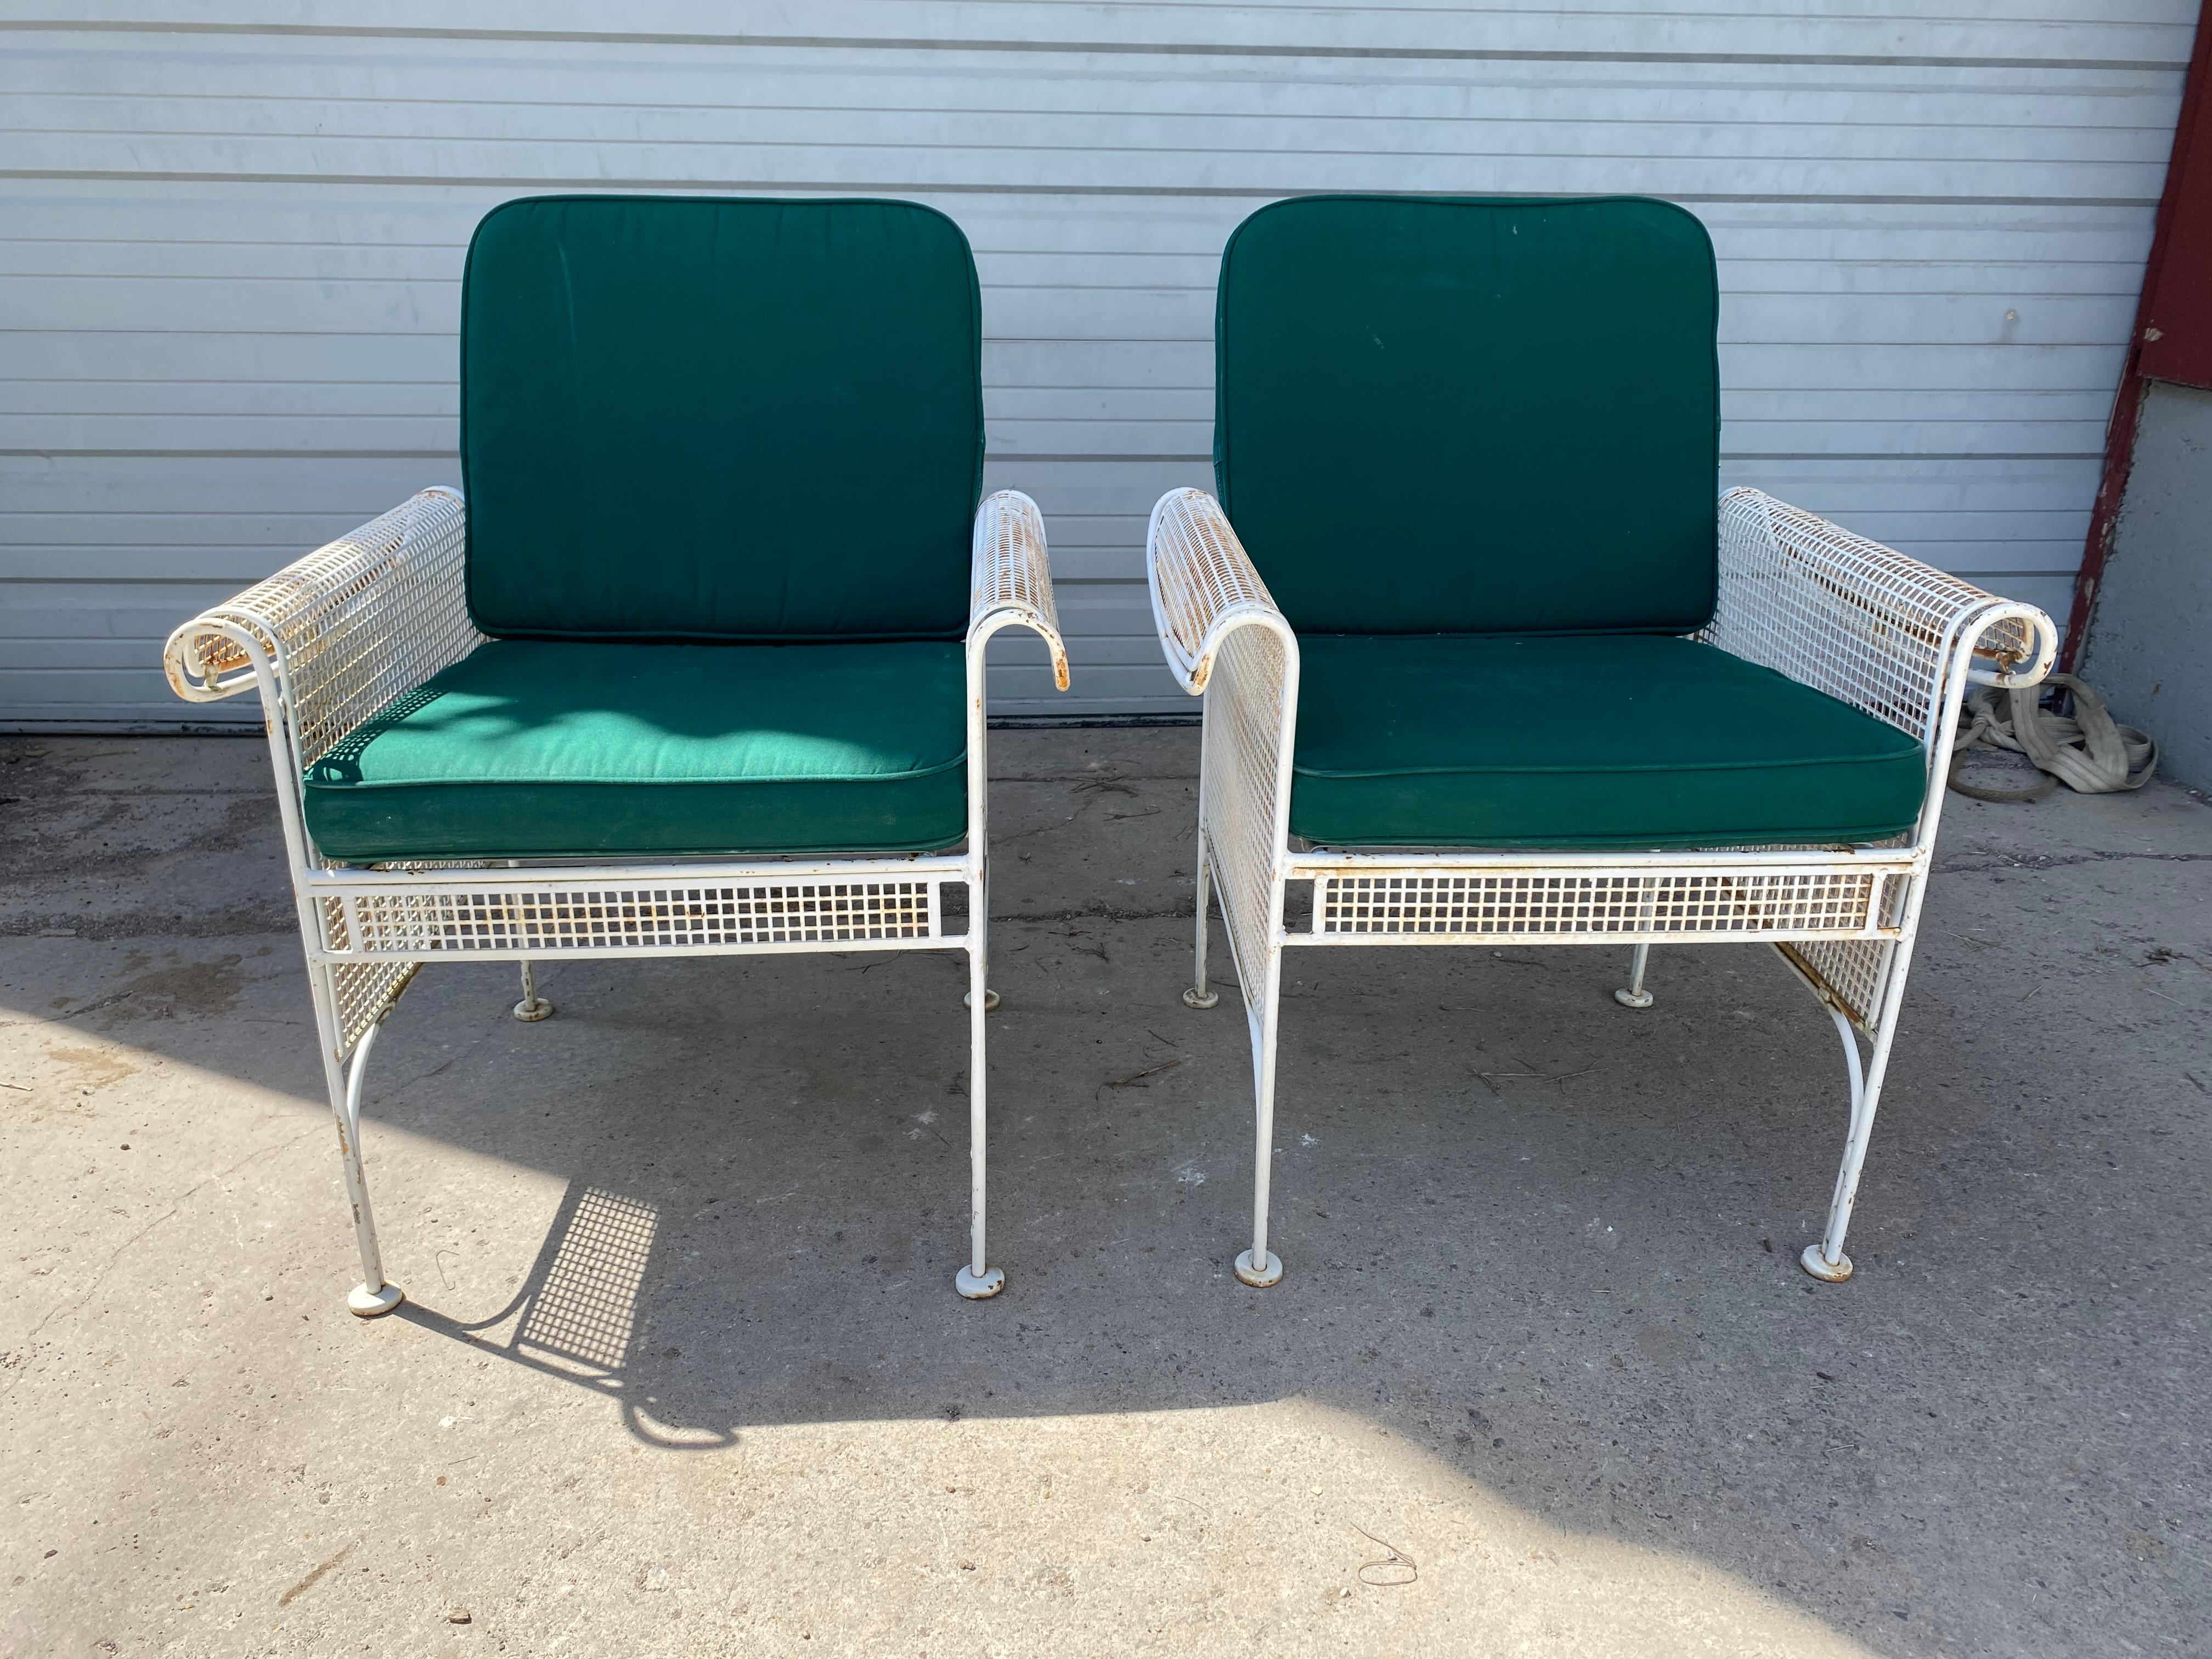 American Outdoor Metal Lounge Chairs, Attrib to Maurizio Tempestini for Salterini